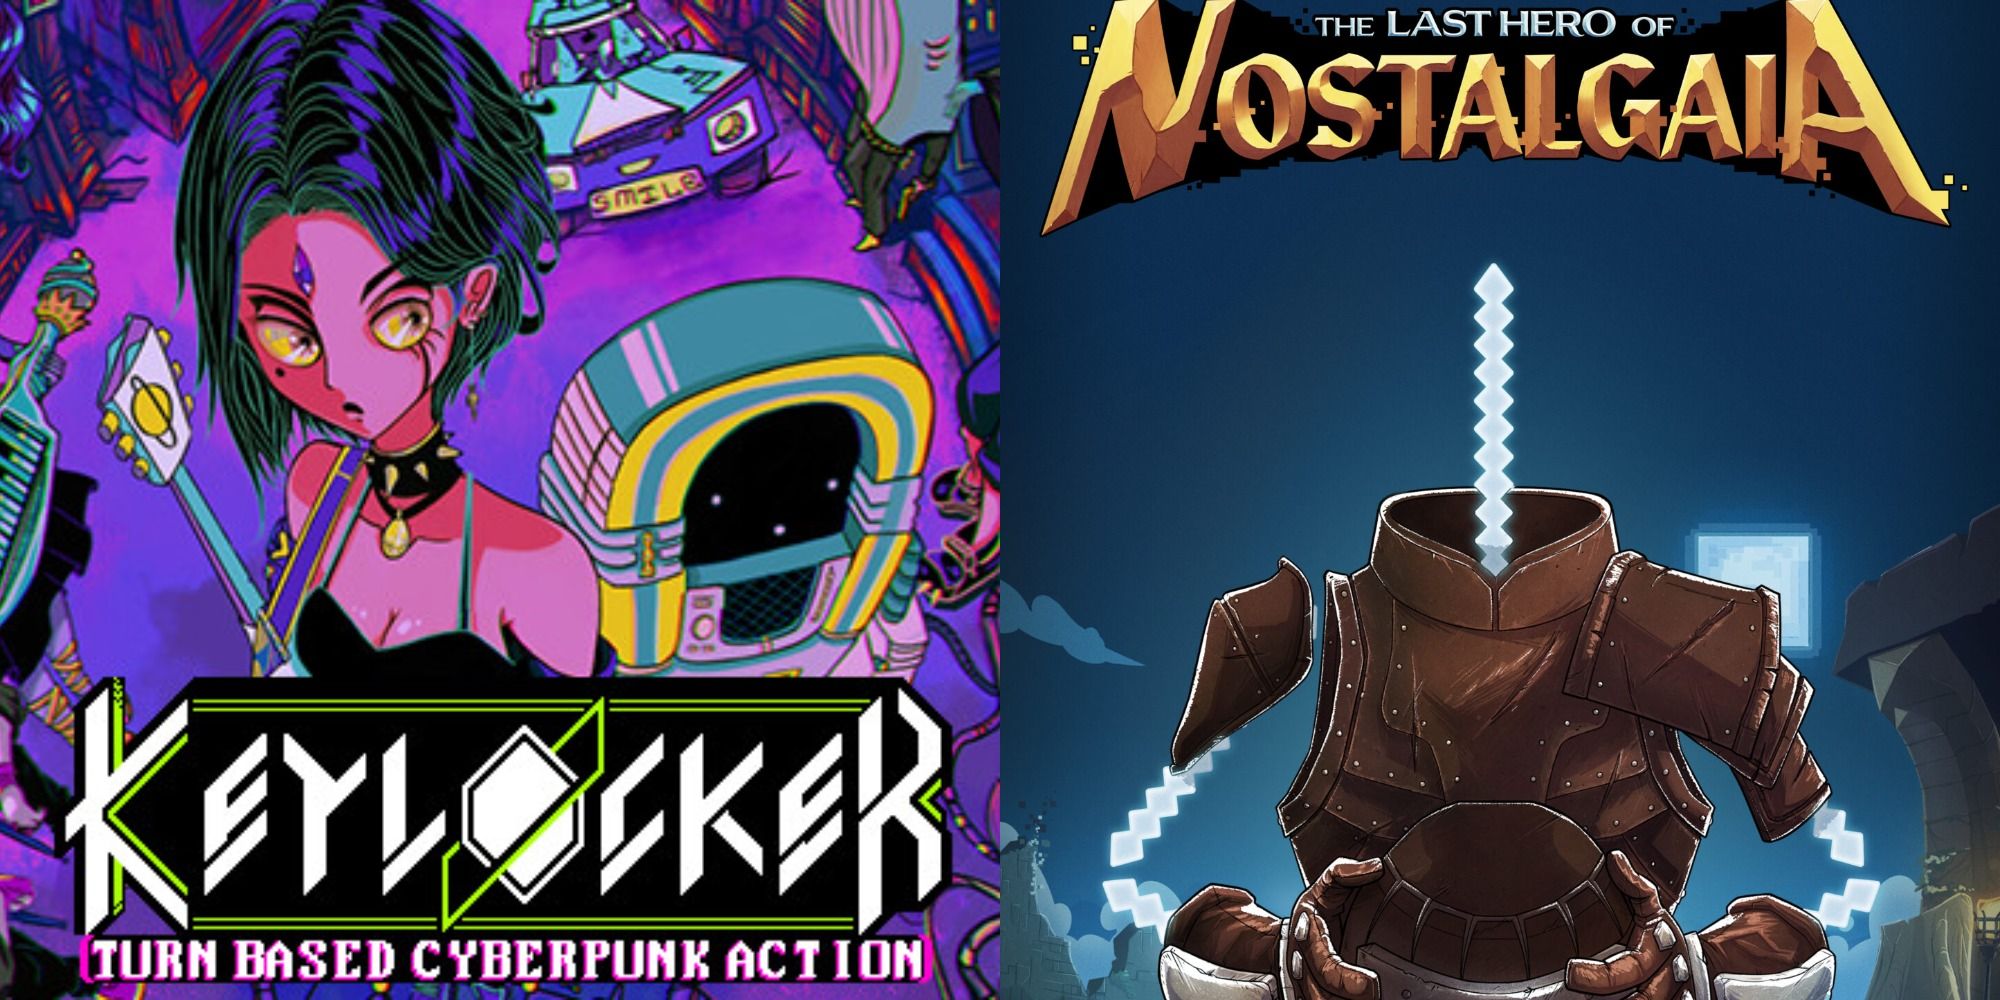 Split image showing artwork for Keylocker and The Last Hero of Nostalgaia.